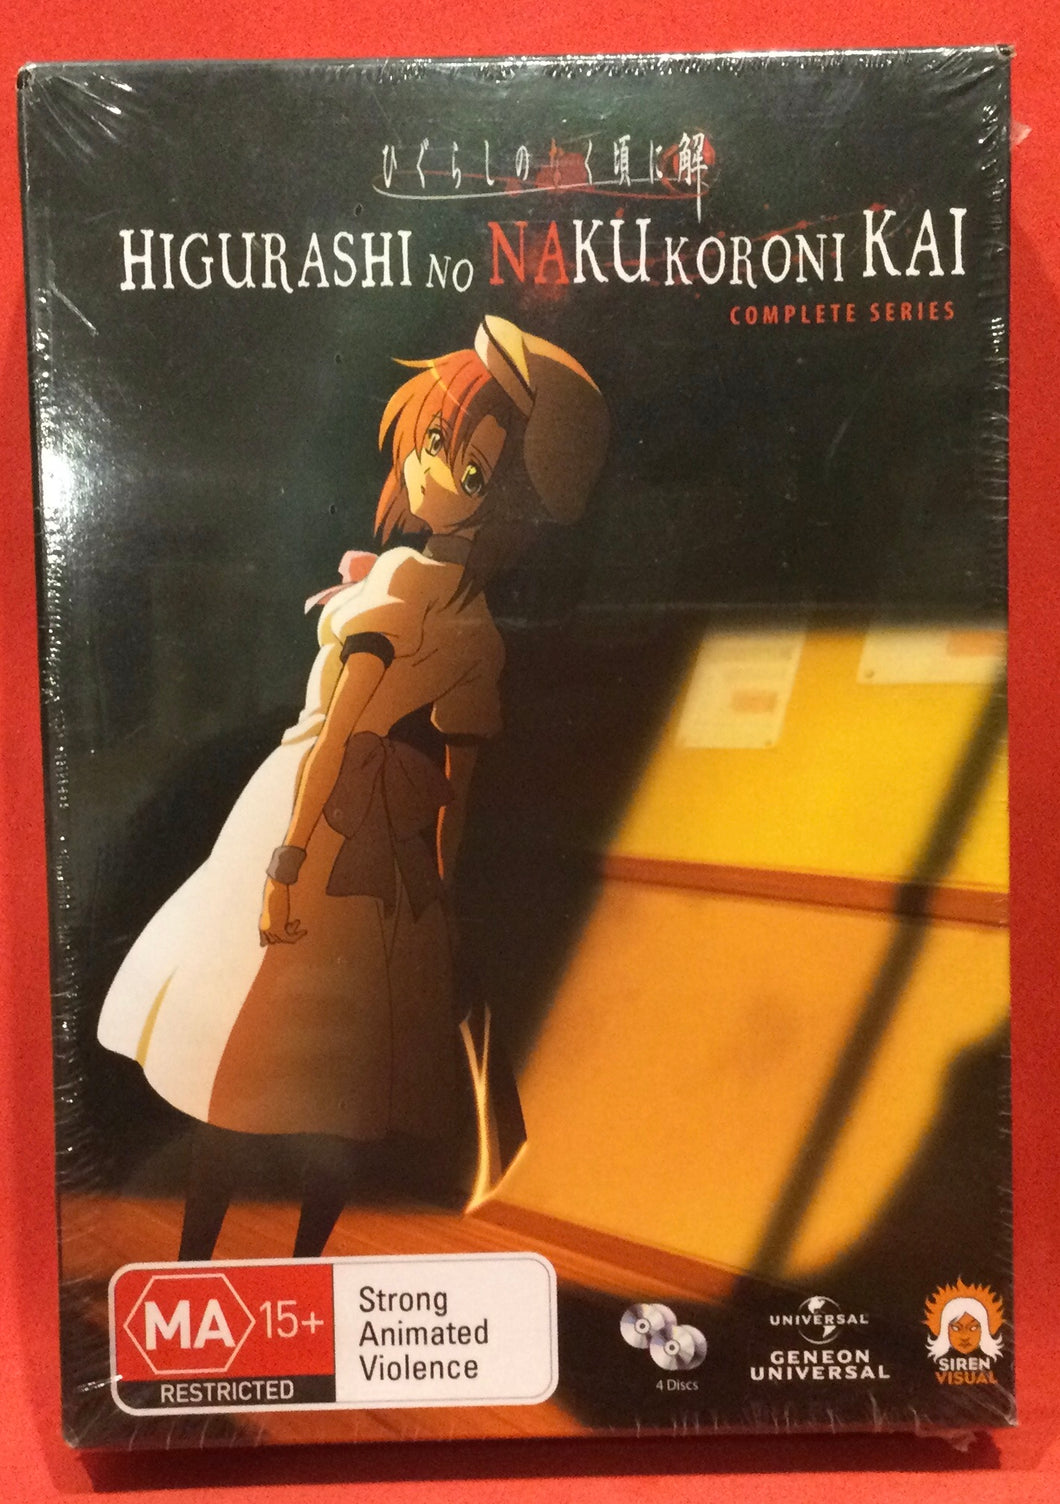 HIGURASHI NO NAKU KORONI KAI - COMPLETE SERIES - 4 DVD DISCS (SEALED)